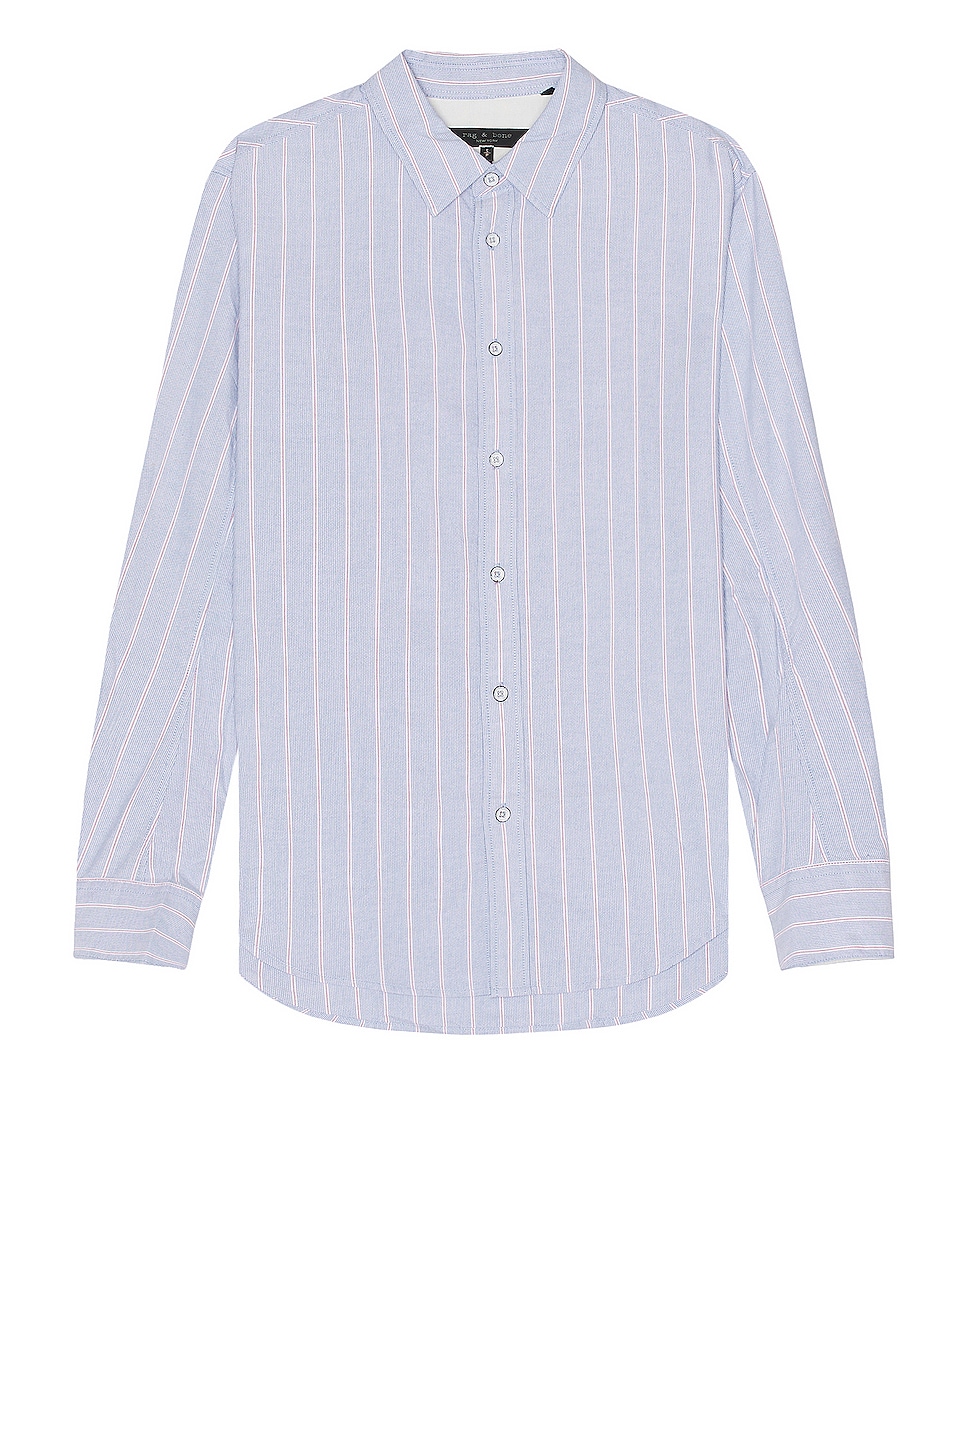 Image 1 of Rag & Bone Fit 2 Engineered Oxford Shirt in Blue Stripe